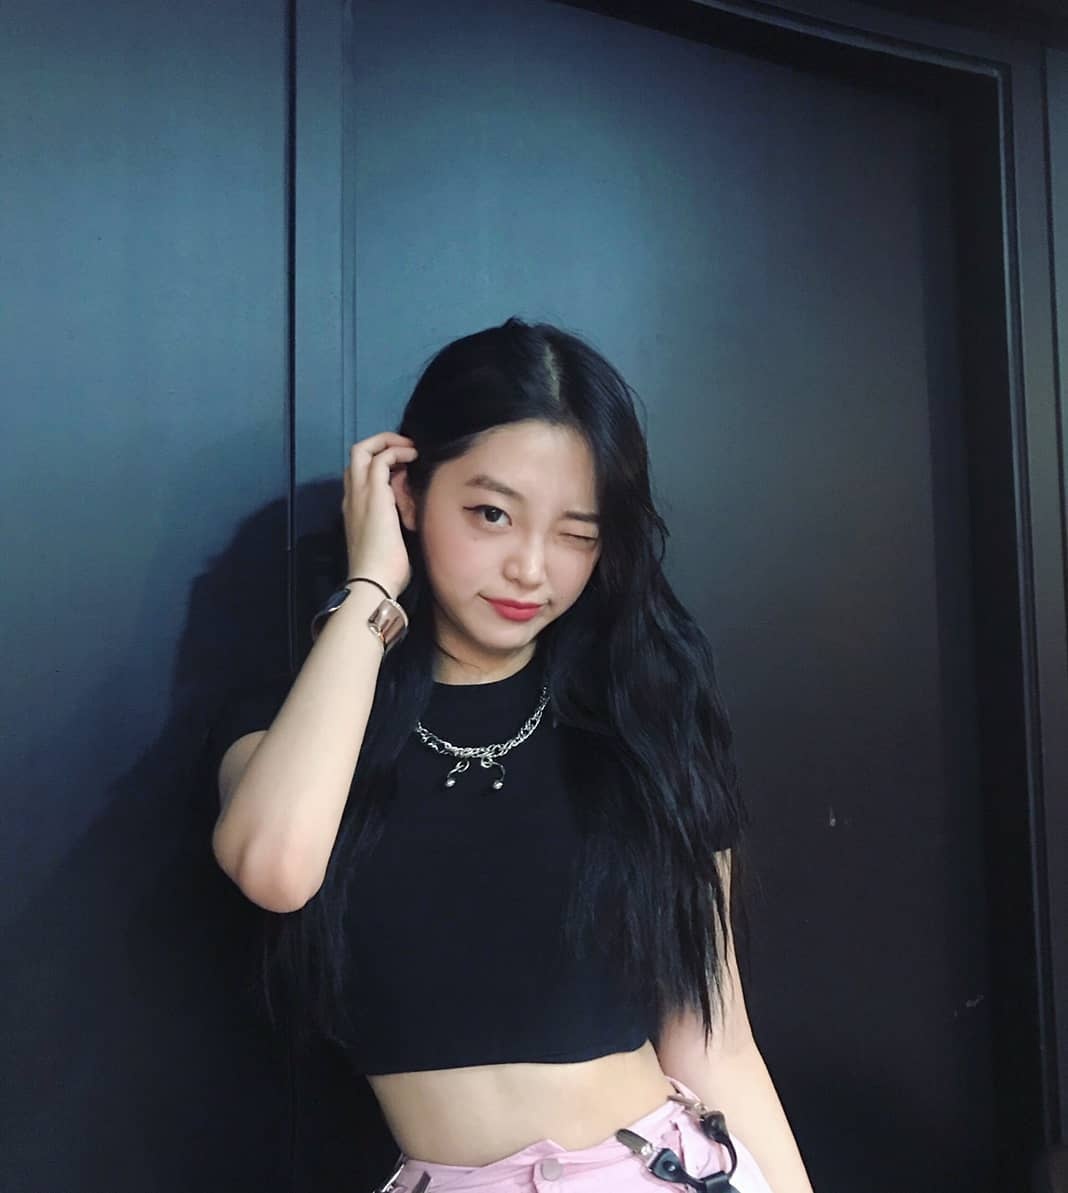 Sihyun (Wish Girls 2nd Season Member) Age, Bio, Wiki, Facts & More